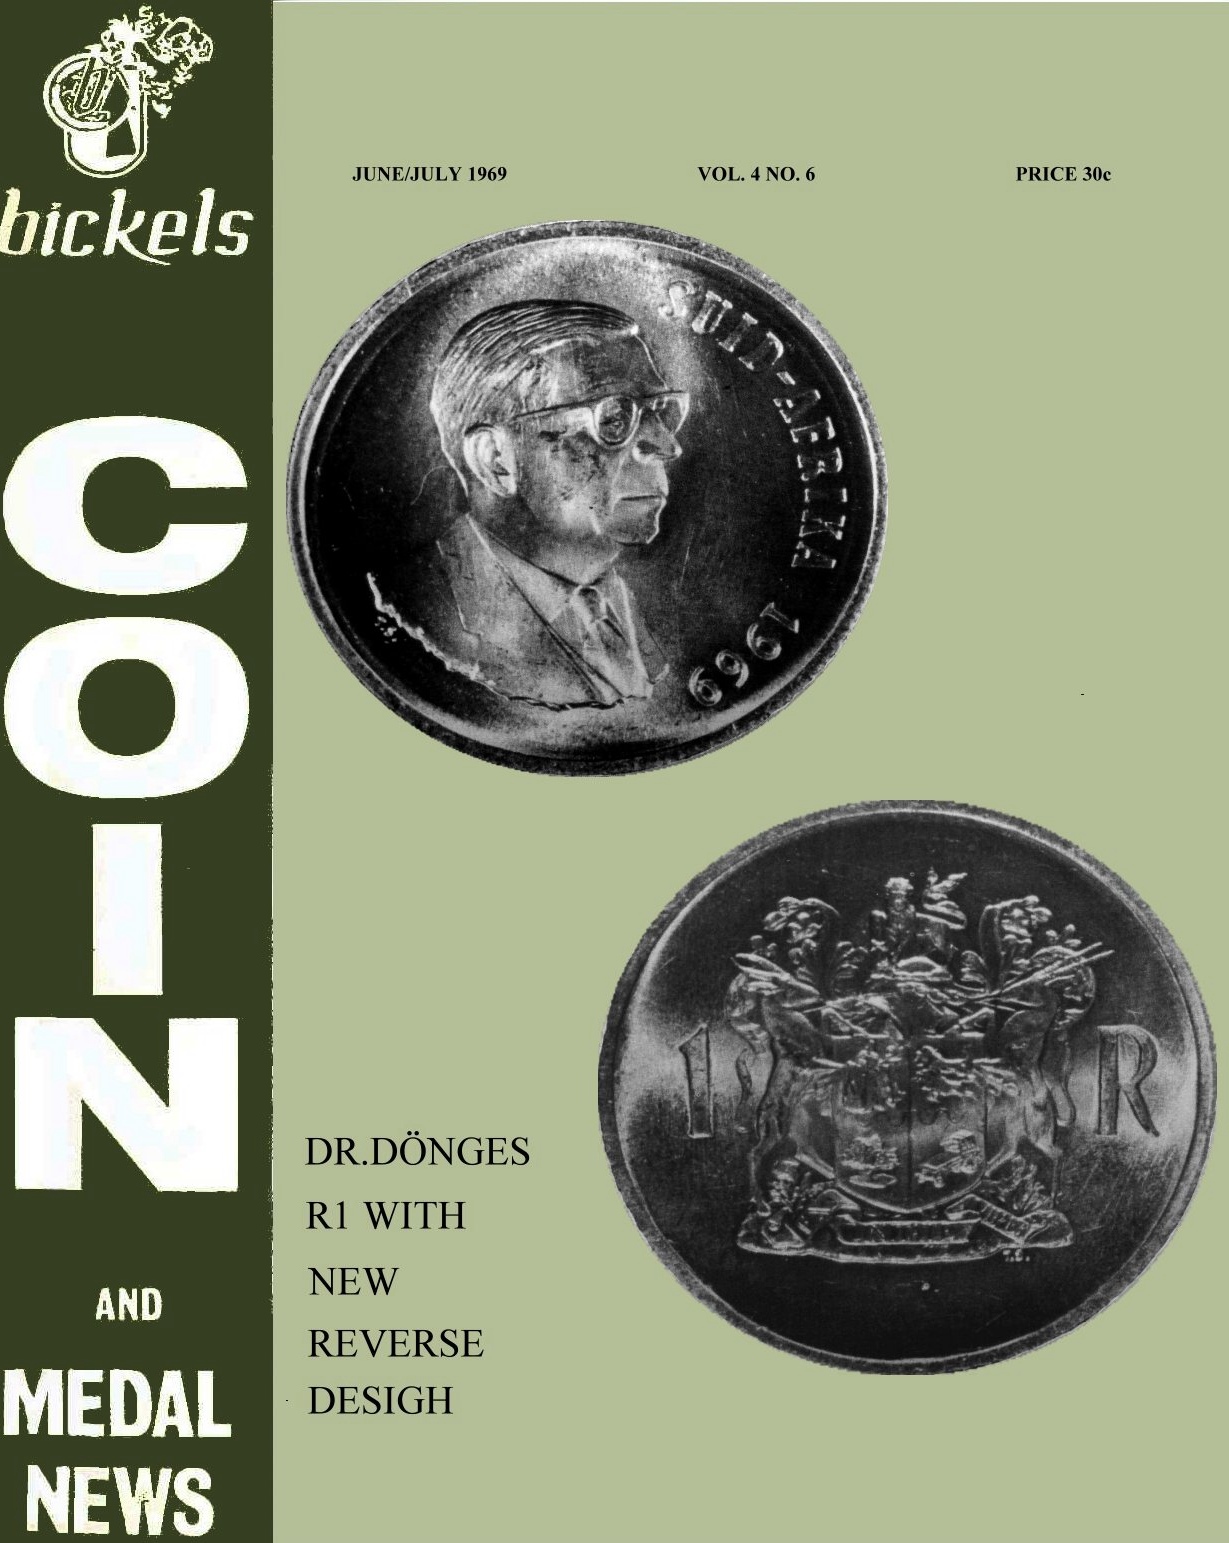 Bickels Coin & Medal News June July 1969 Vol 4 No 6